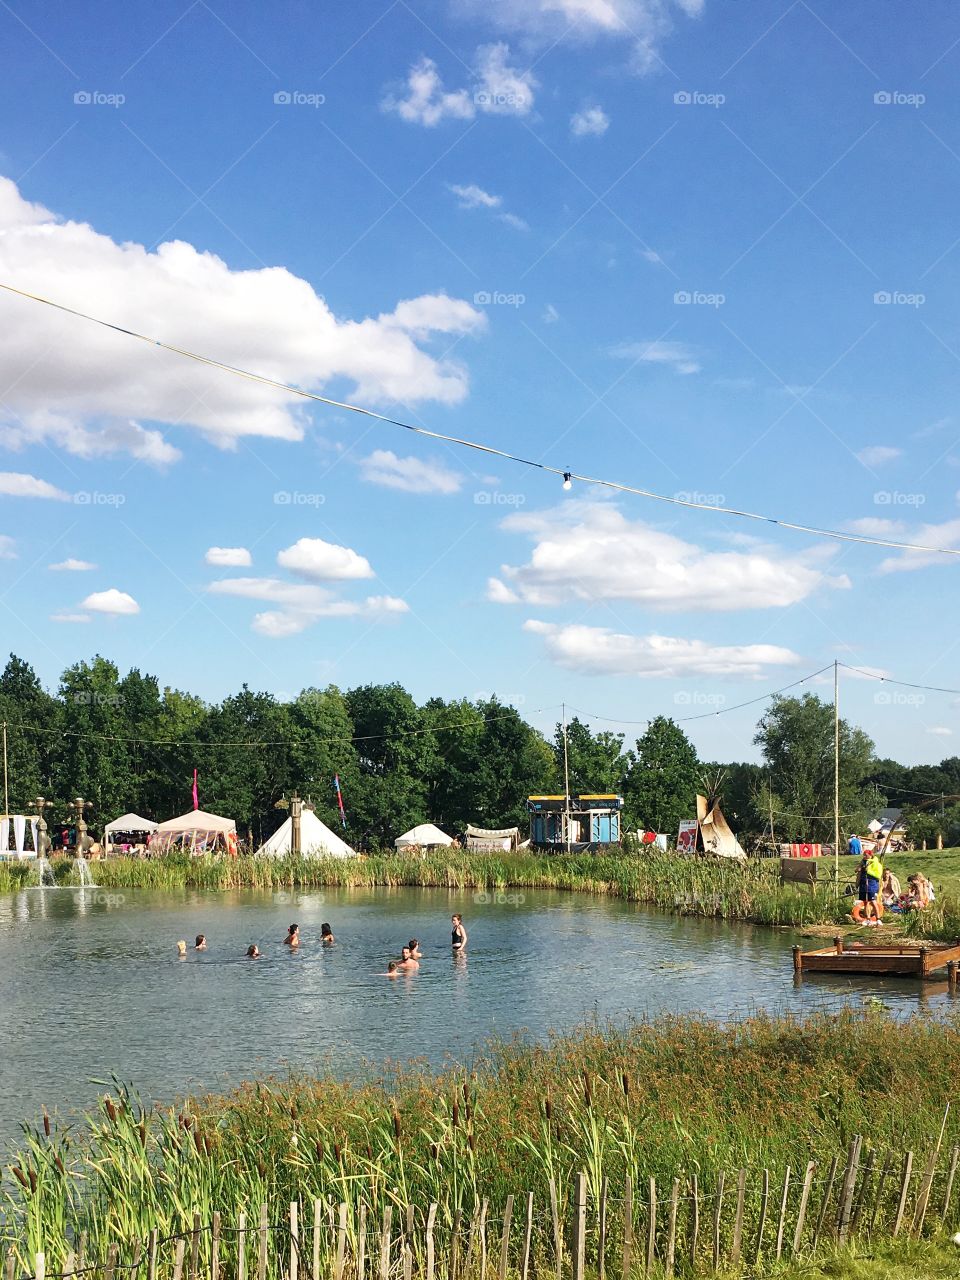 Lake at a festival 